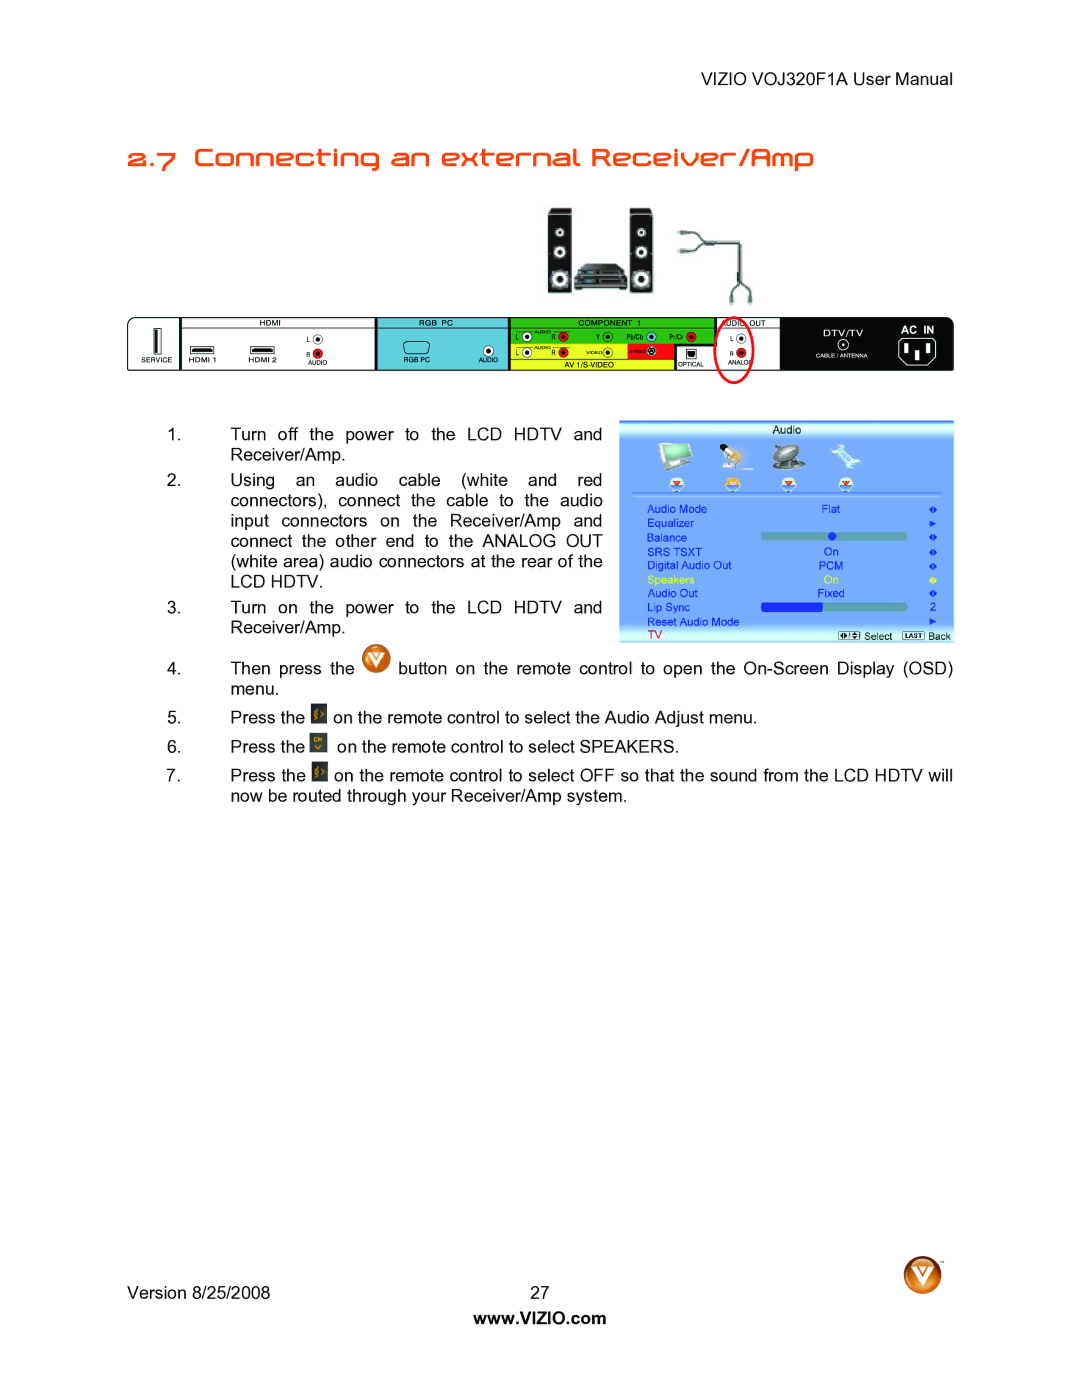 Vizio VOJ320F1A user manual Connecting an external Receiver/Amp, LCD Hdtv 